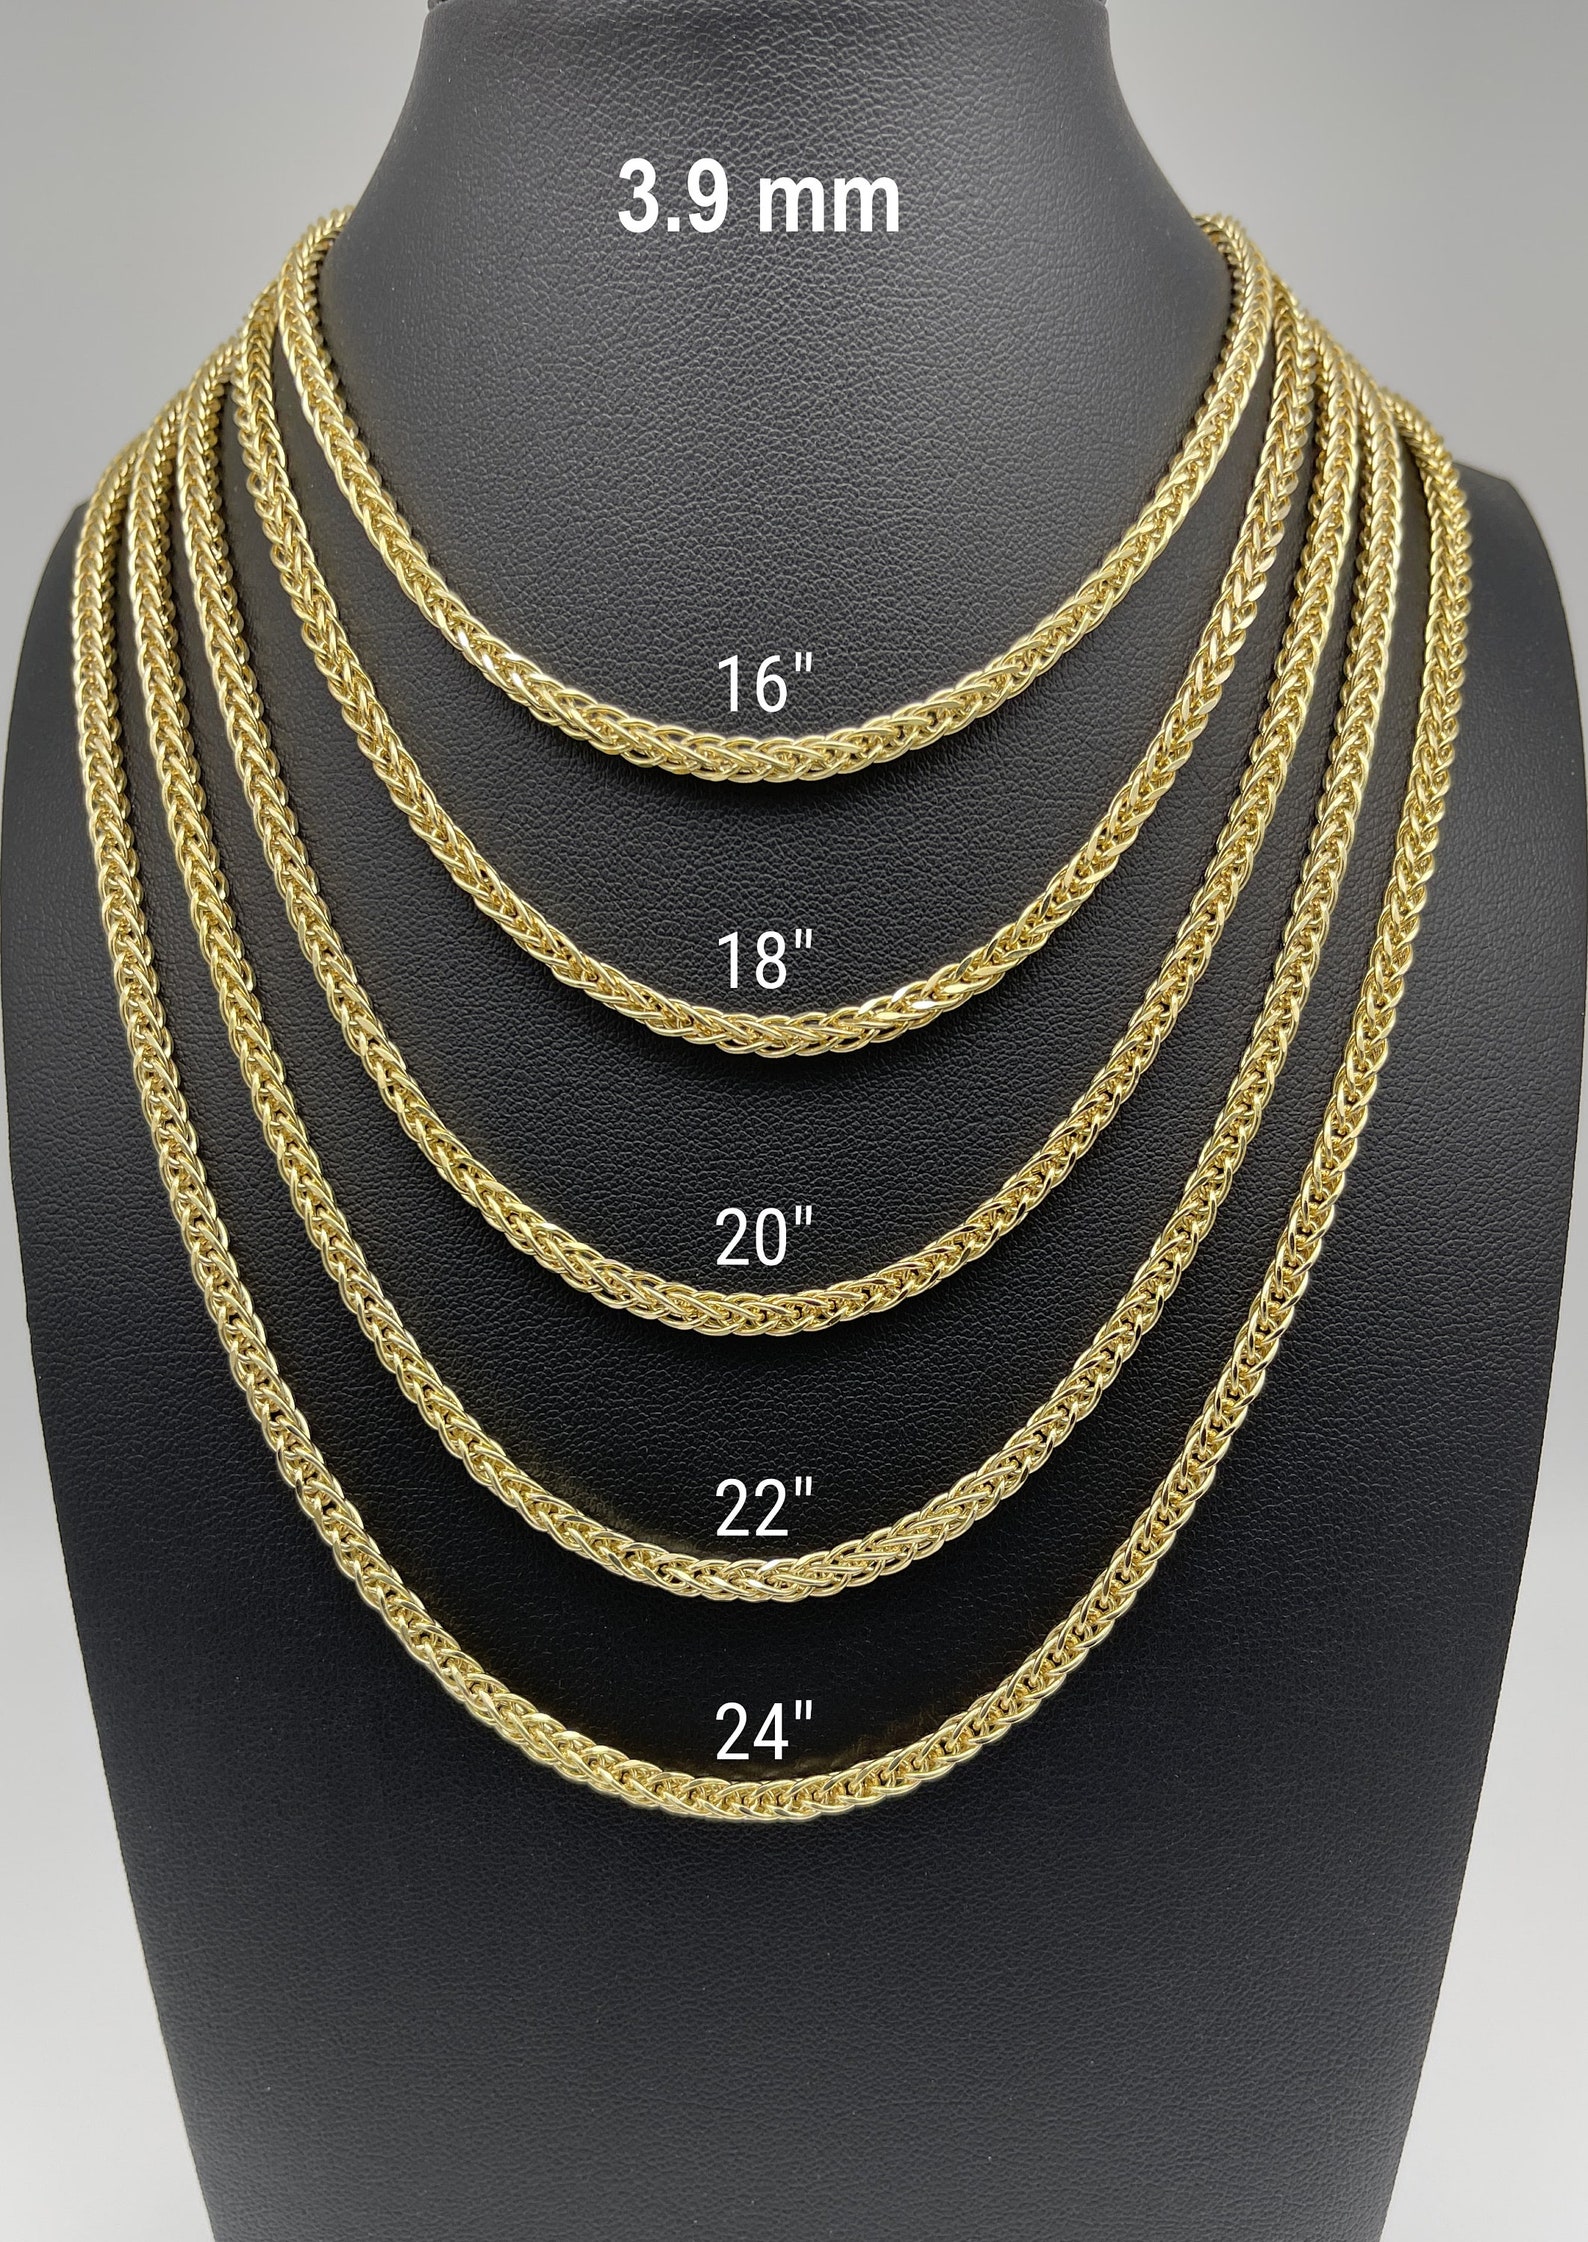 Square Wheat Chain Men Women Diamond Cut Necklace 1.75-3.9mm - Etsy